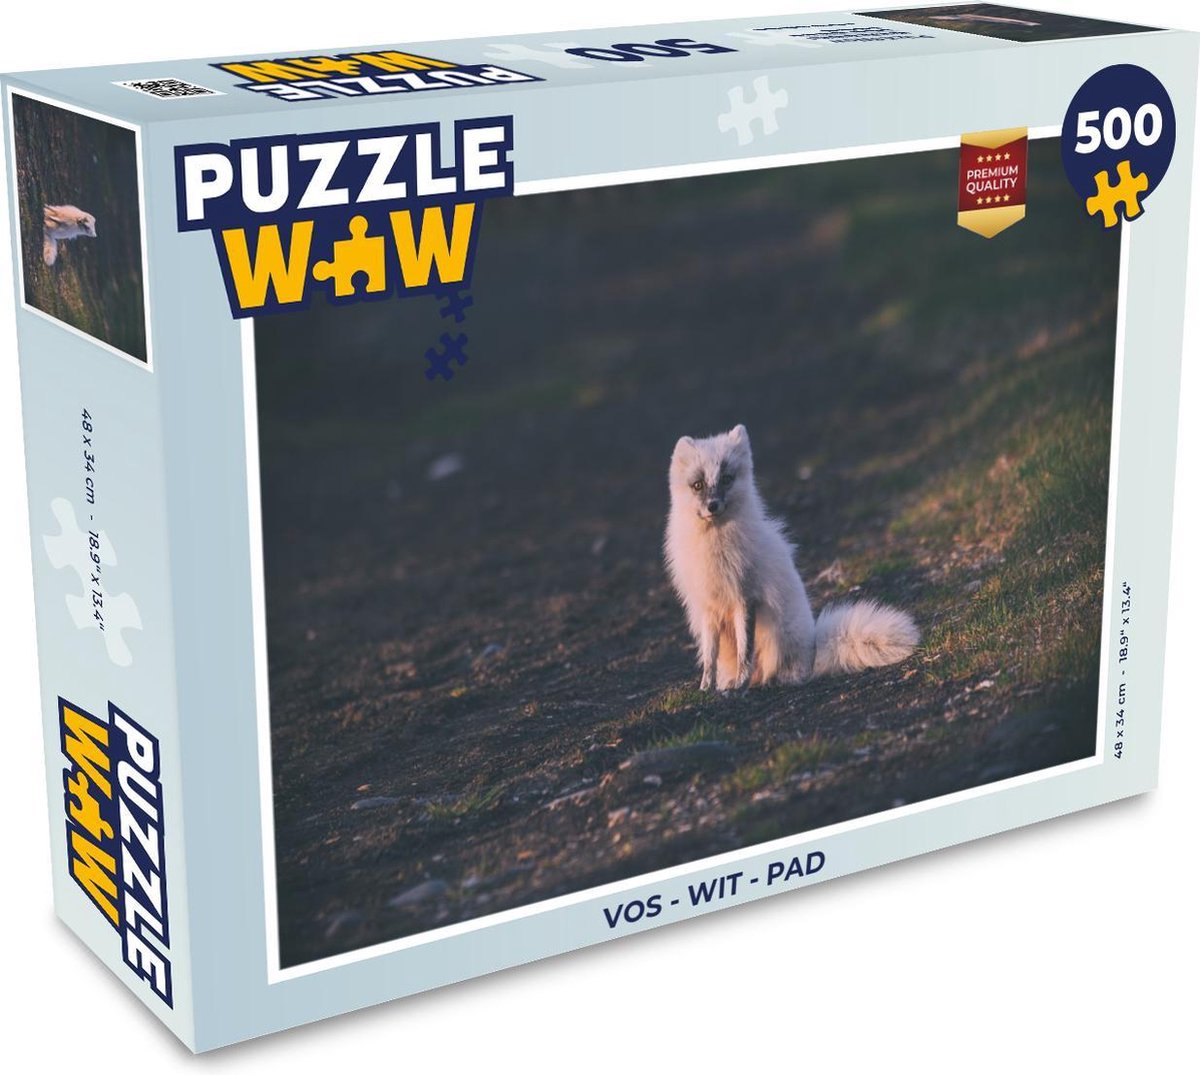 Afbeelding van product PuzzleWow  Puzzel Vos - Wit - Pad - Legpuzzel - Puzzel 500 stukjes